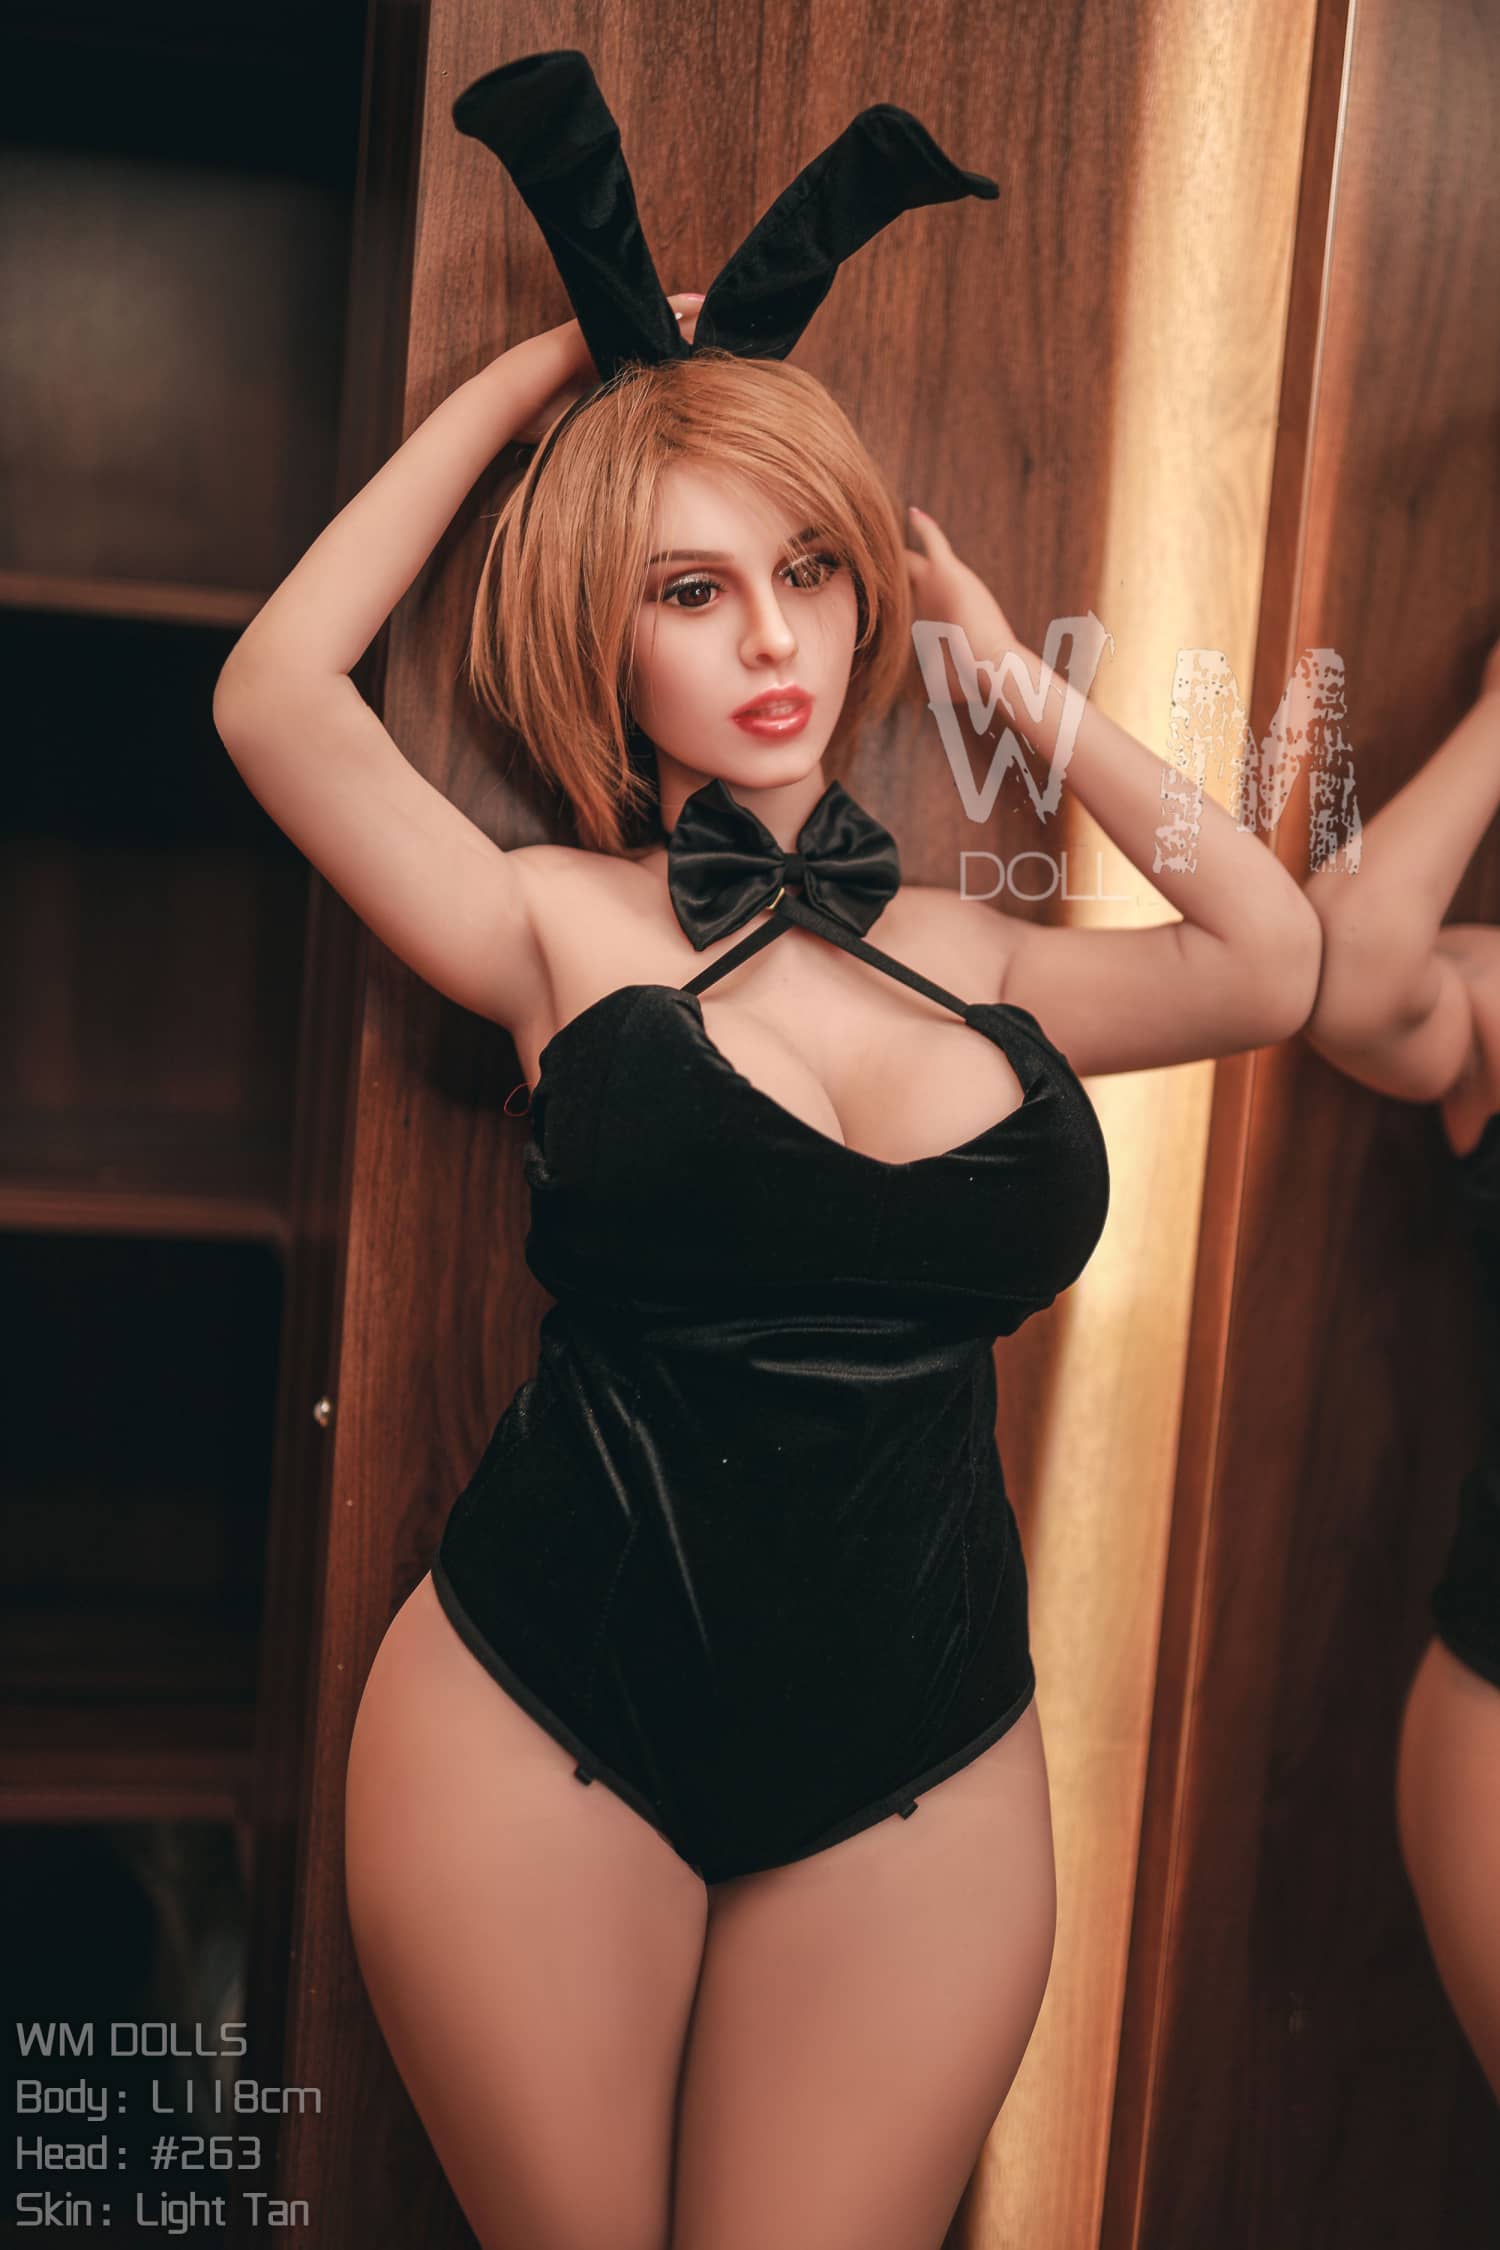 WM Doll 118cm STPE Large Breasts - Mia WM DOLL Littlelovedoll